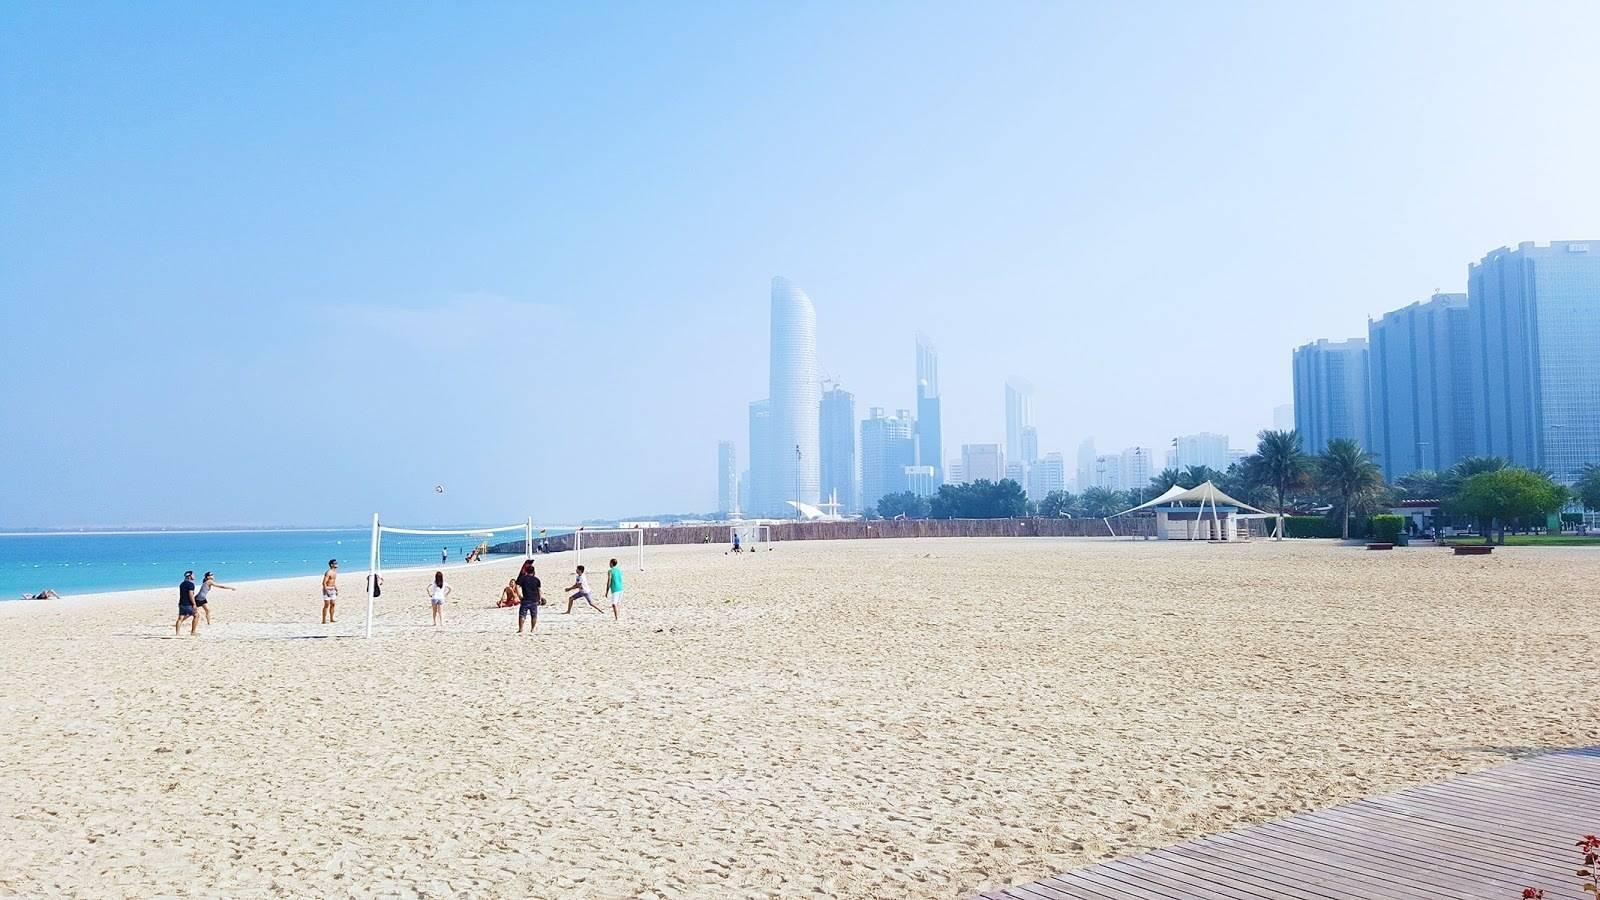 Abu Dhabi Corniche Beach24302